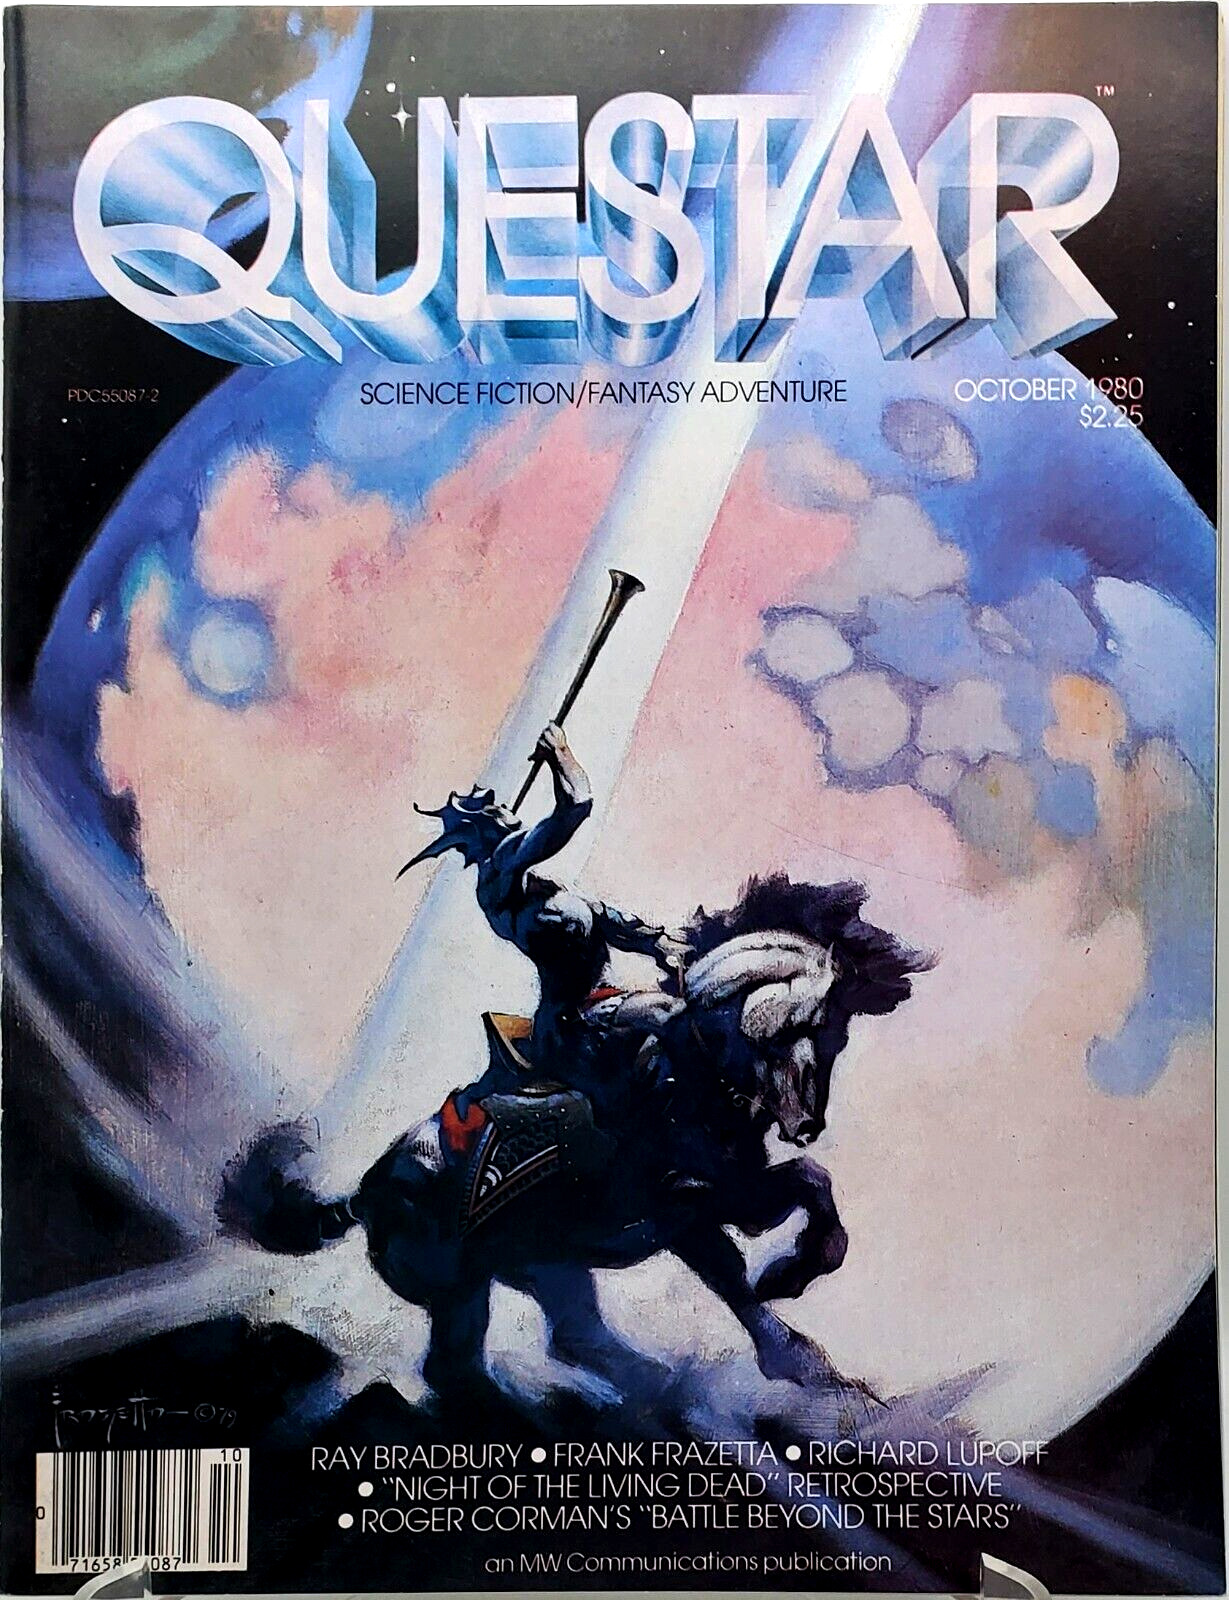 Questar #9 (Oct 1980)-Frank Frazetta-John Russo-Richard Lupoff NM